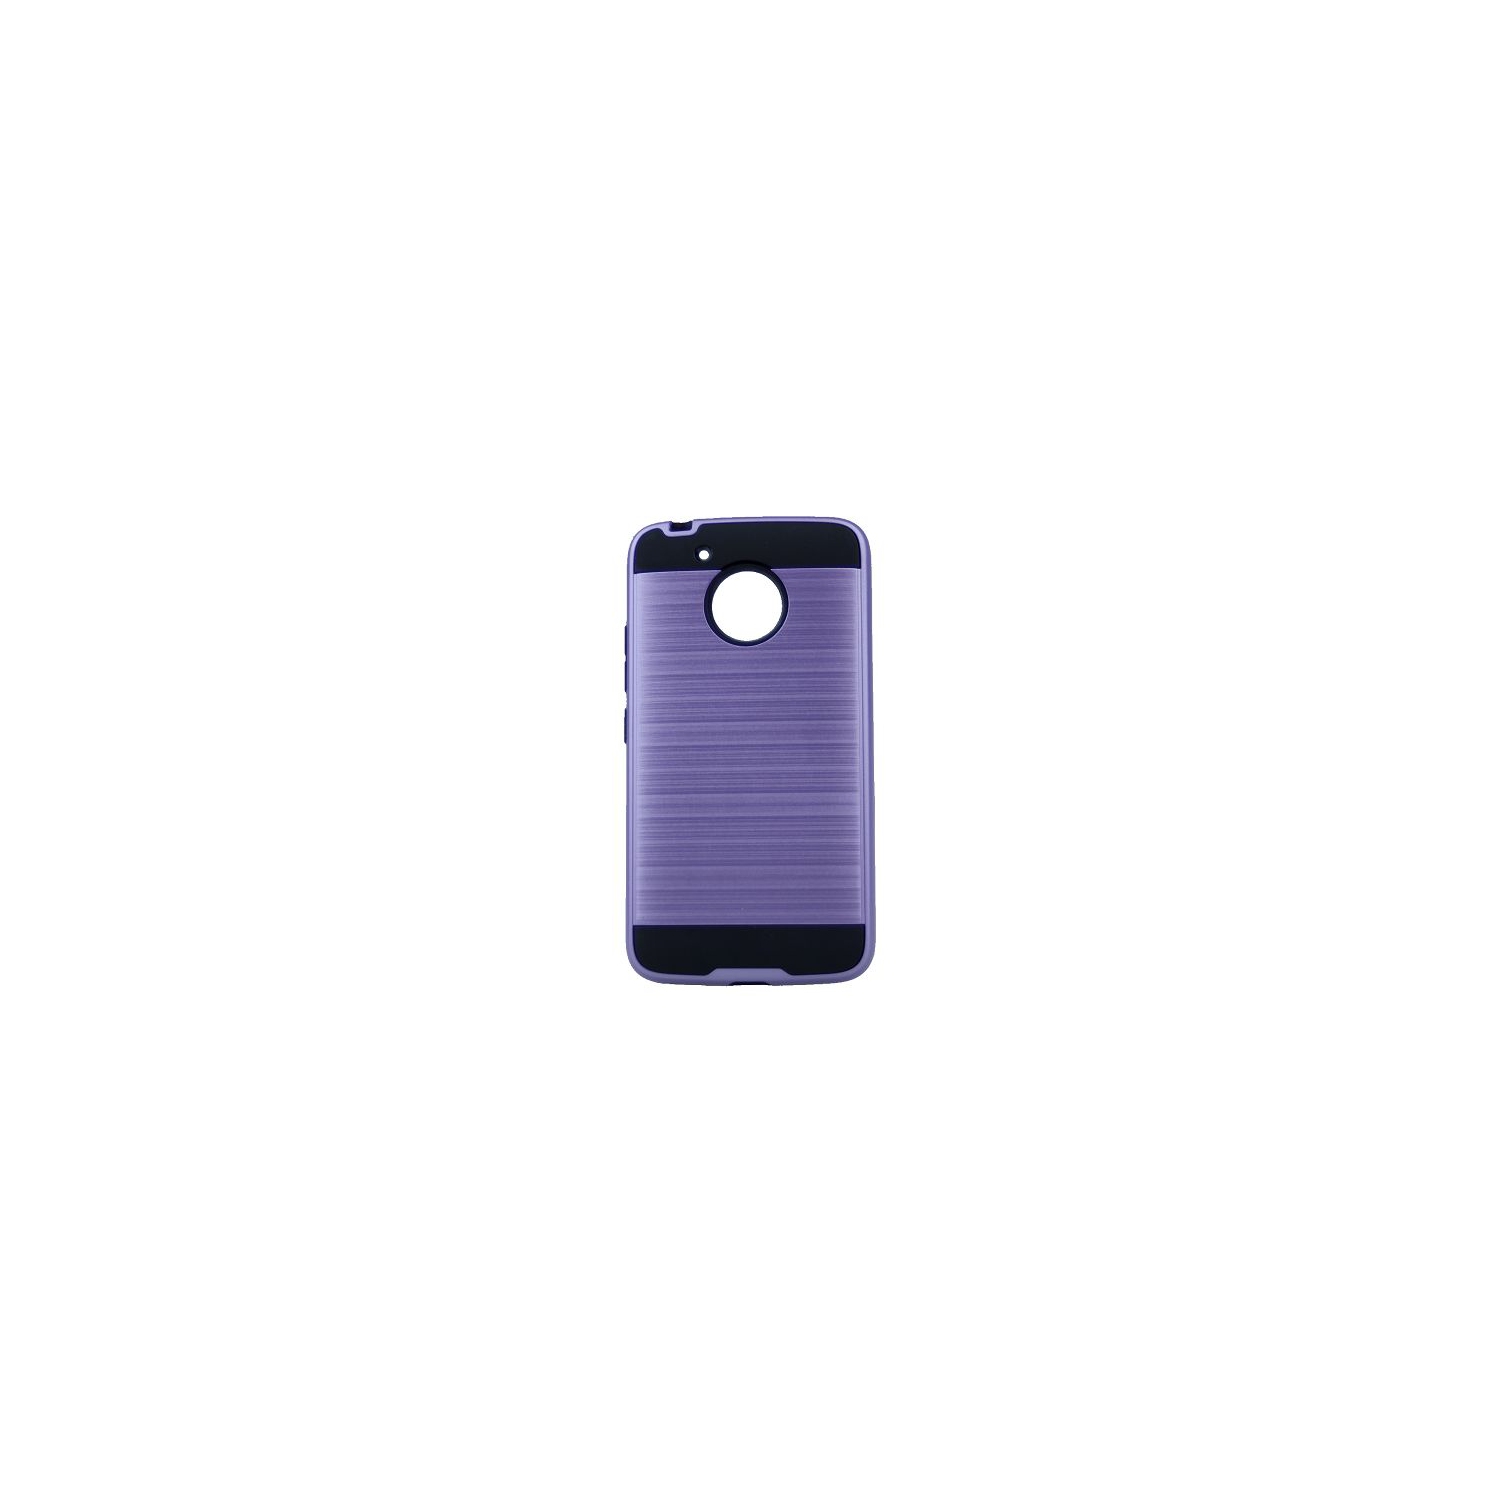 Moto G5 Plus Blush Texture Hard Cover Case, Purple